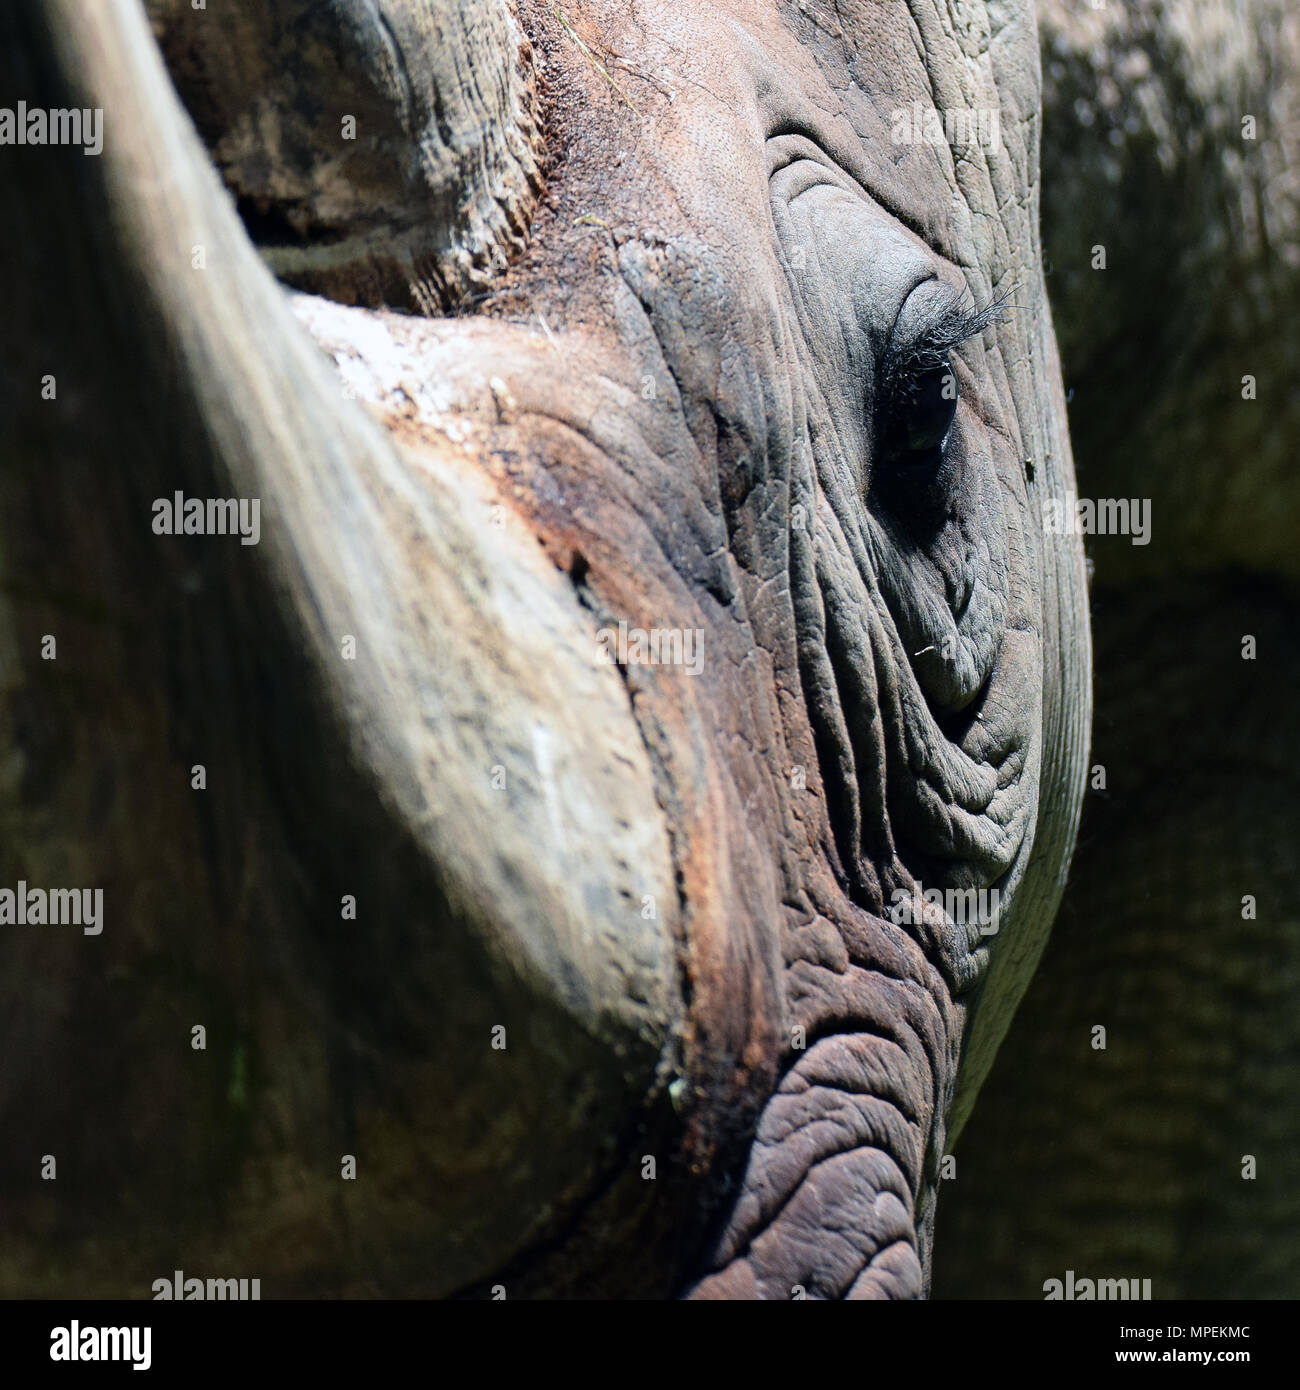 Rhinoceros close up. Focus on eye. Stock Photo